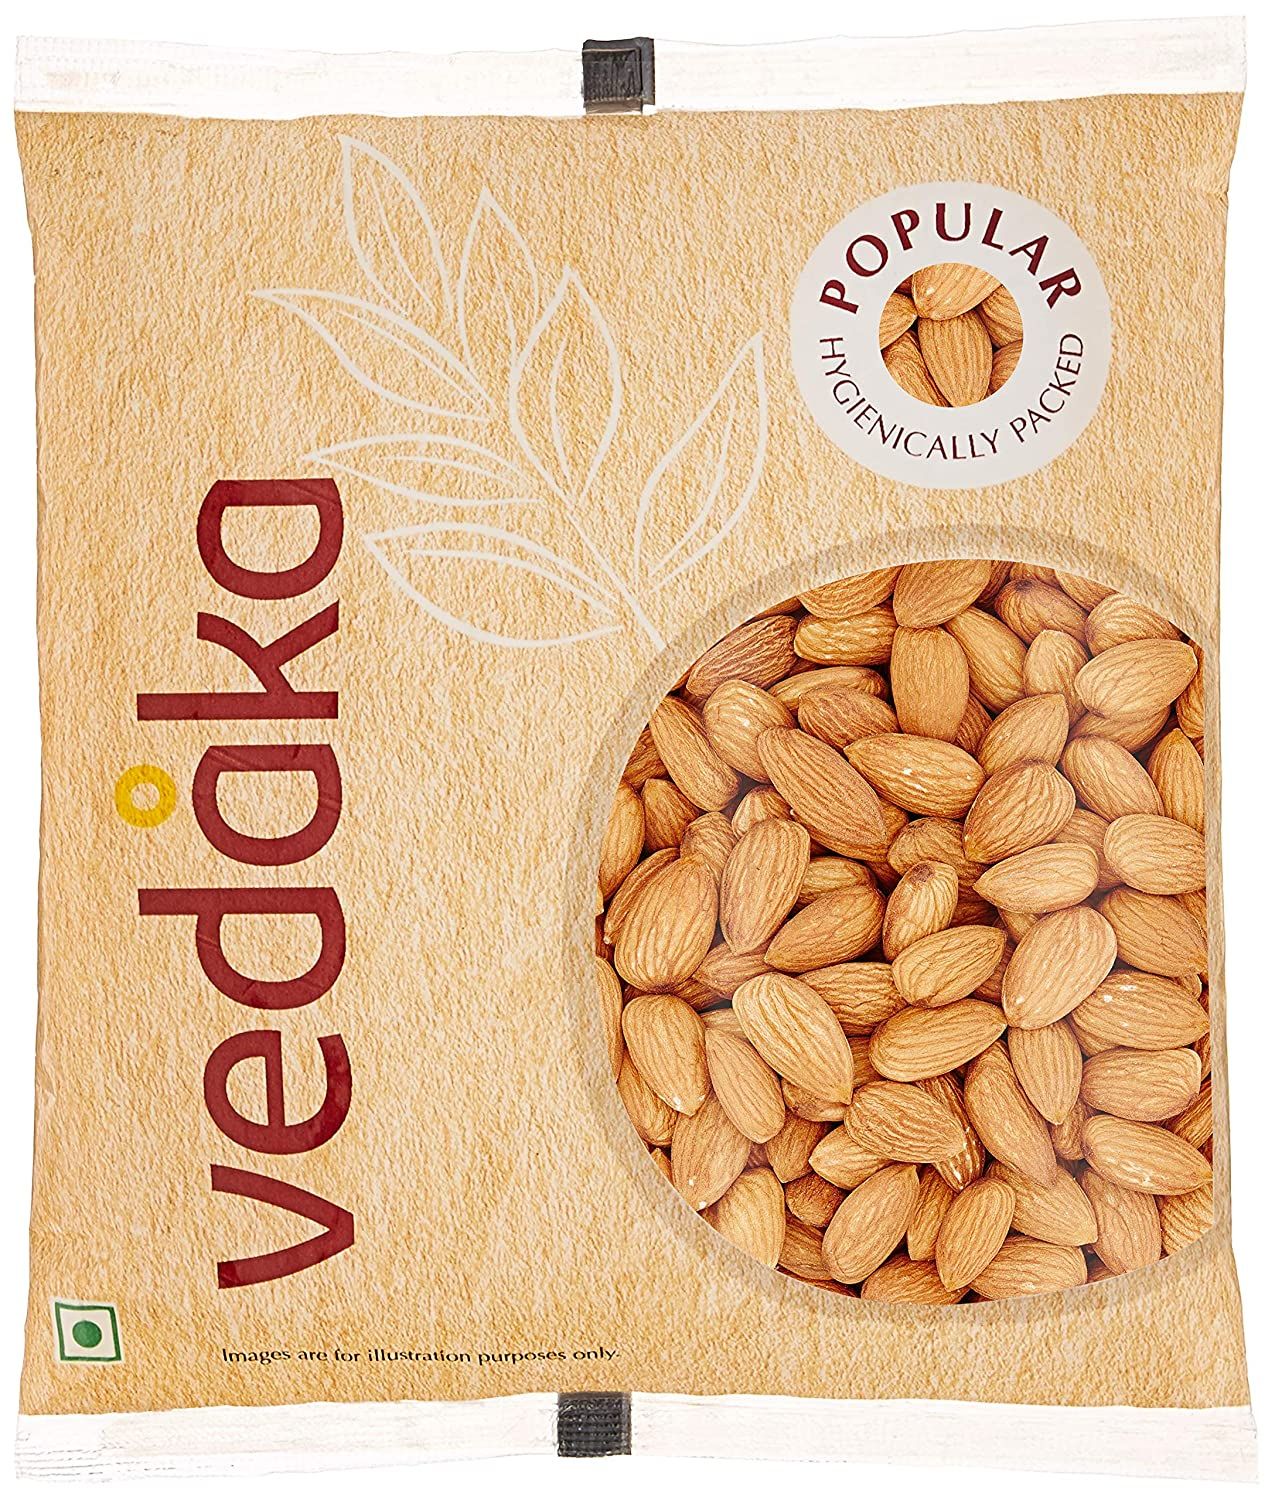 Vedaka Popular Whole Almond Image